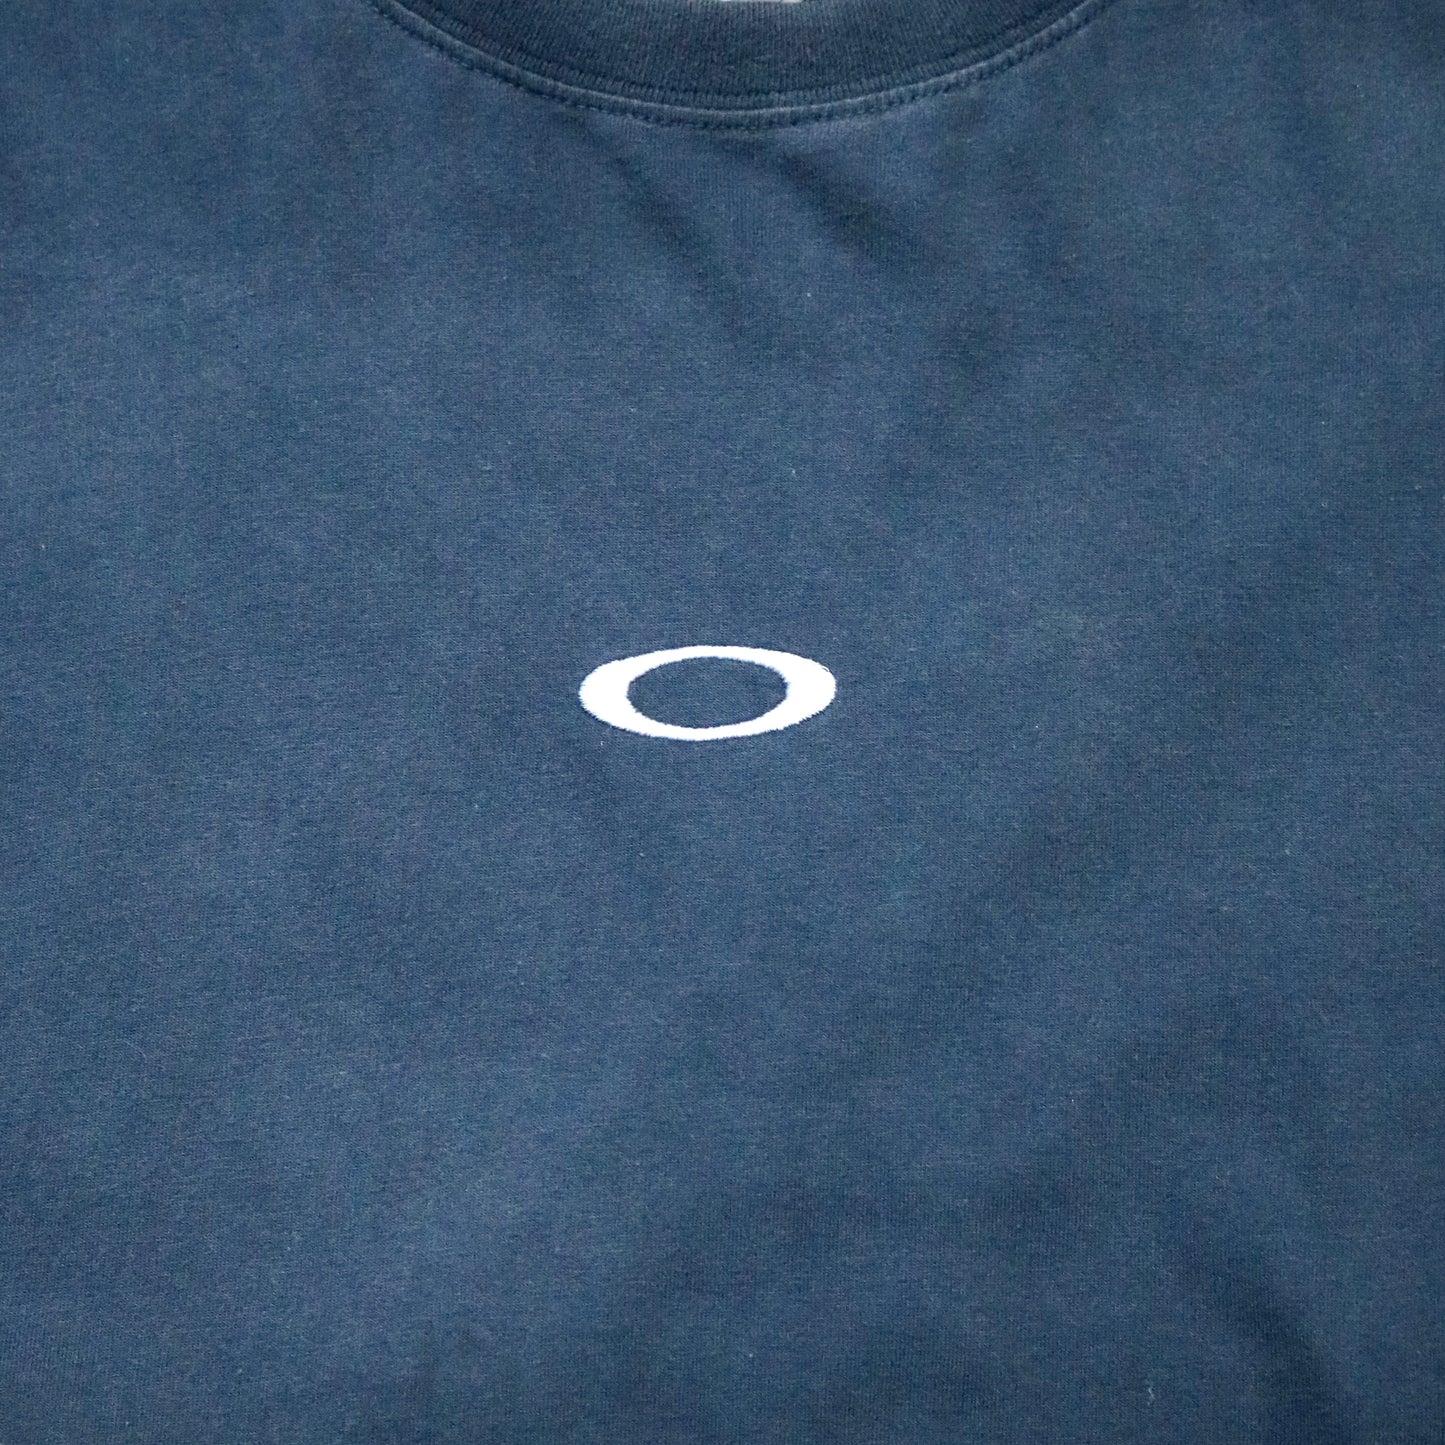 00's "OAKLEY" l/s t-shirt